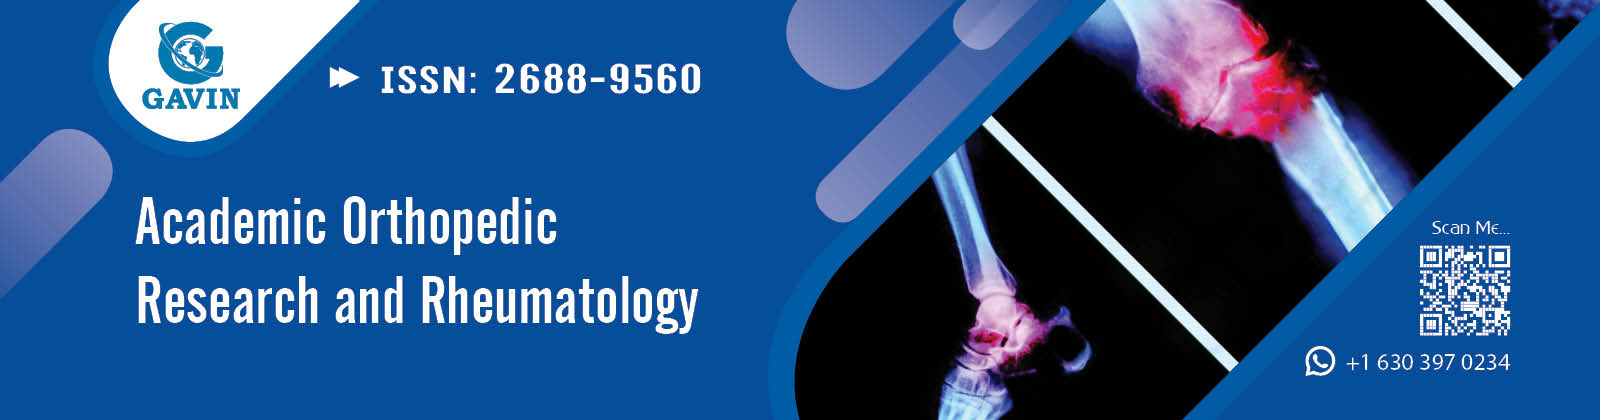 Academic Orthopedic Research and Rheumatology